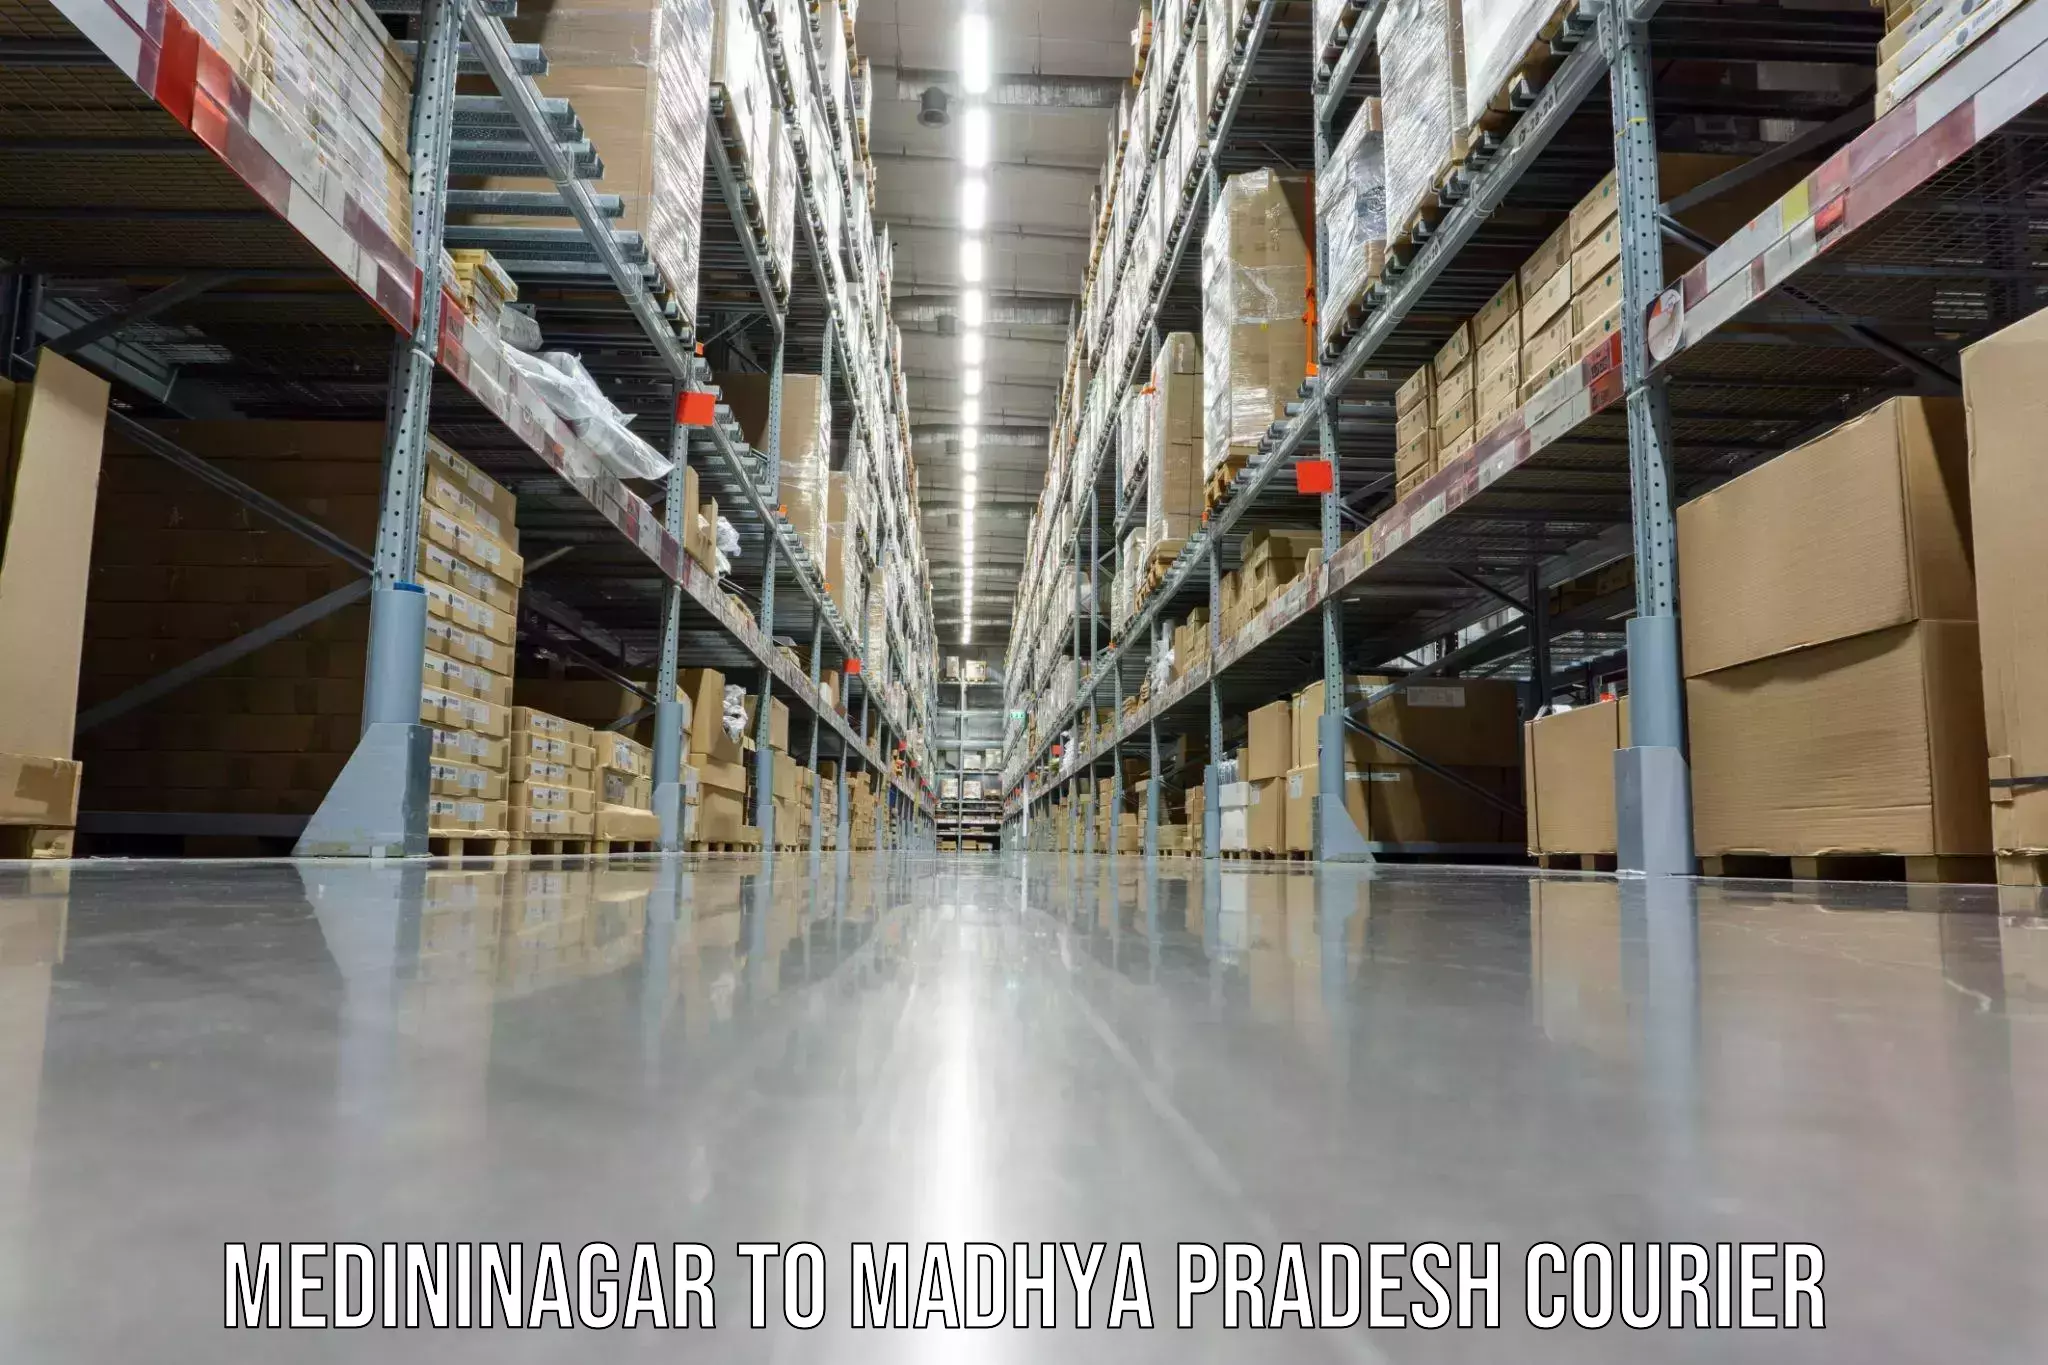 Furniture delivery service Medininagar to Indore